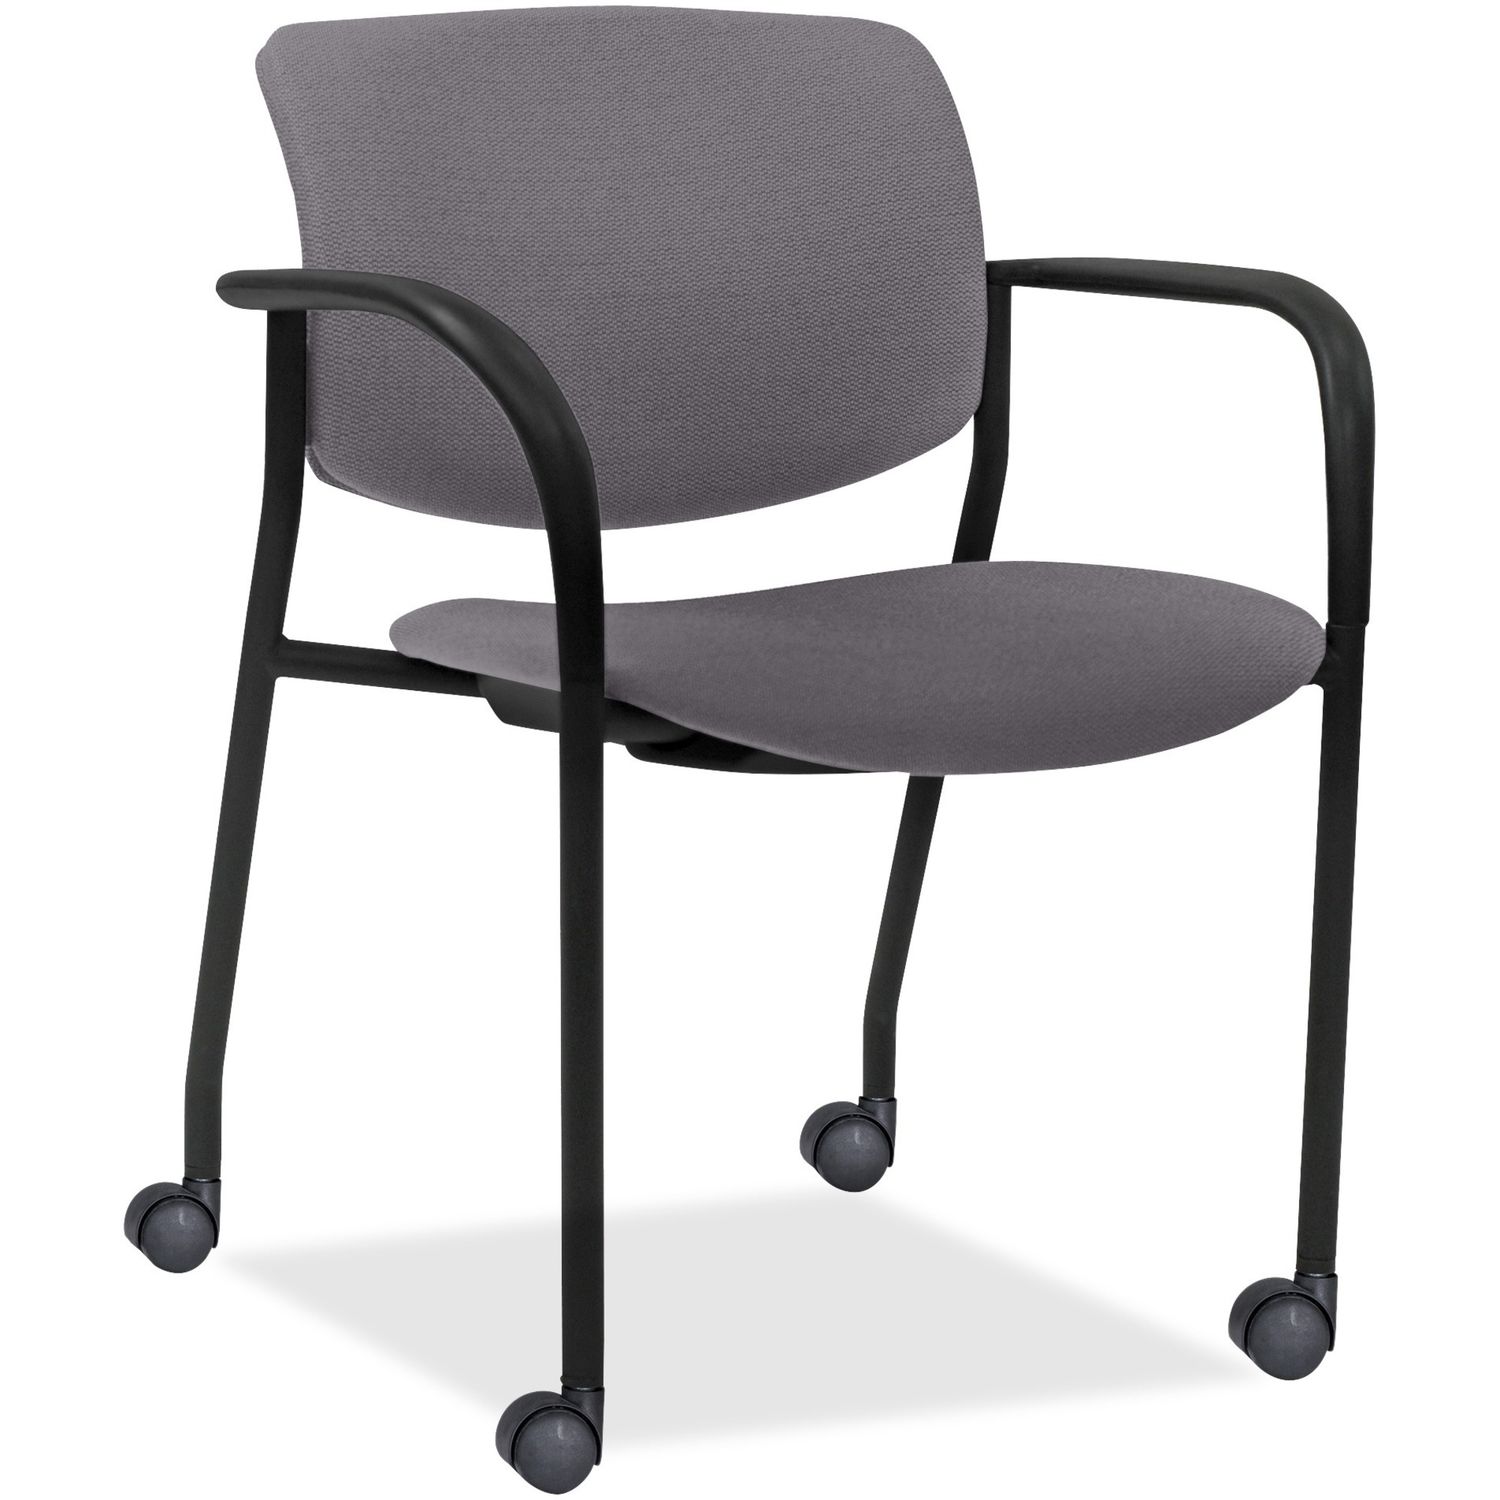 Stack Chairs with Plastic Back & Vinyl Seat Ash Foam, Vinyl Seat, Black Plastic Back, Powder Coated, Black Tubular Steel Frame, Four-legged Base, Armrest, 2 / Carton